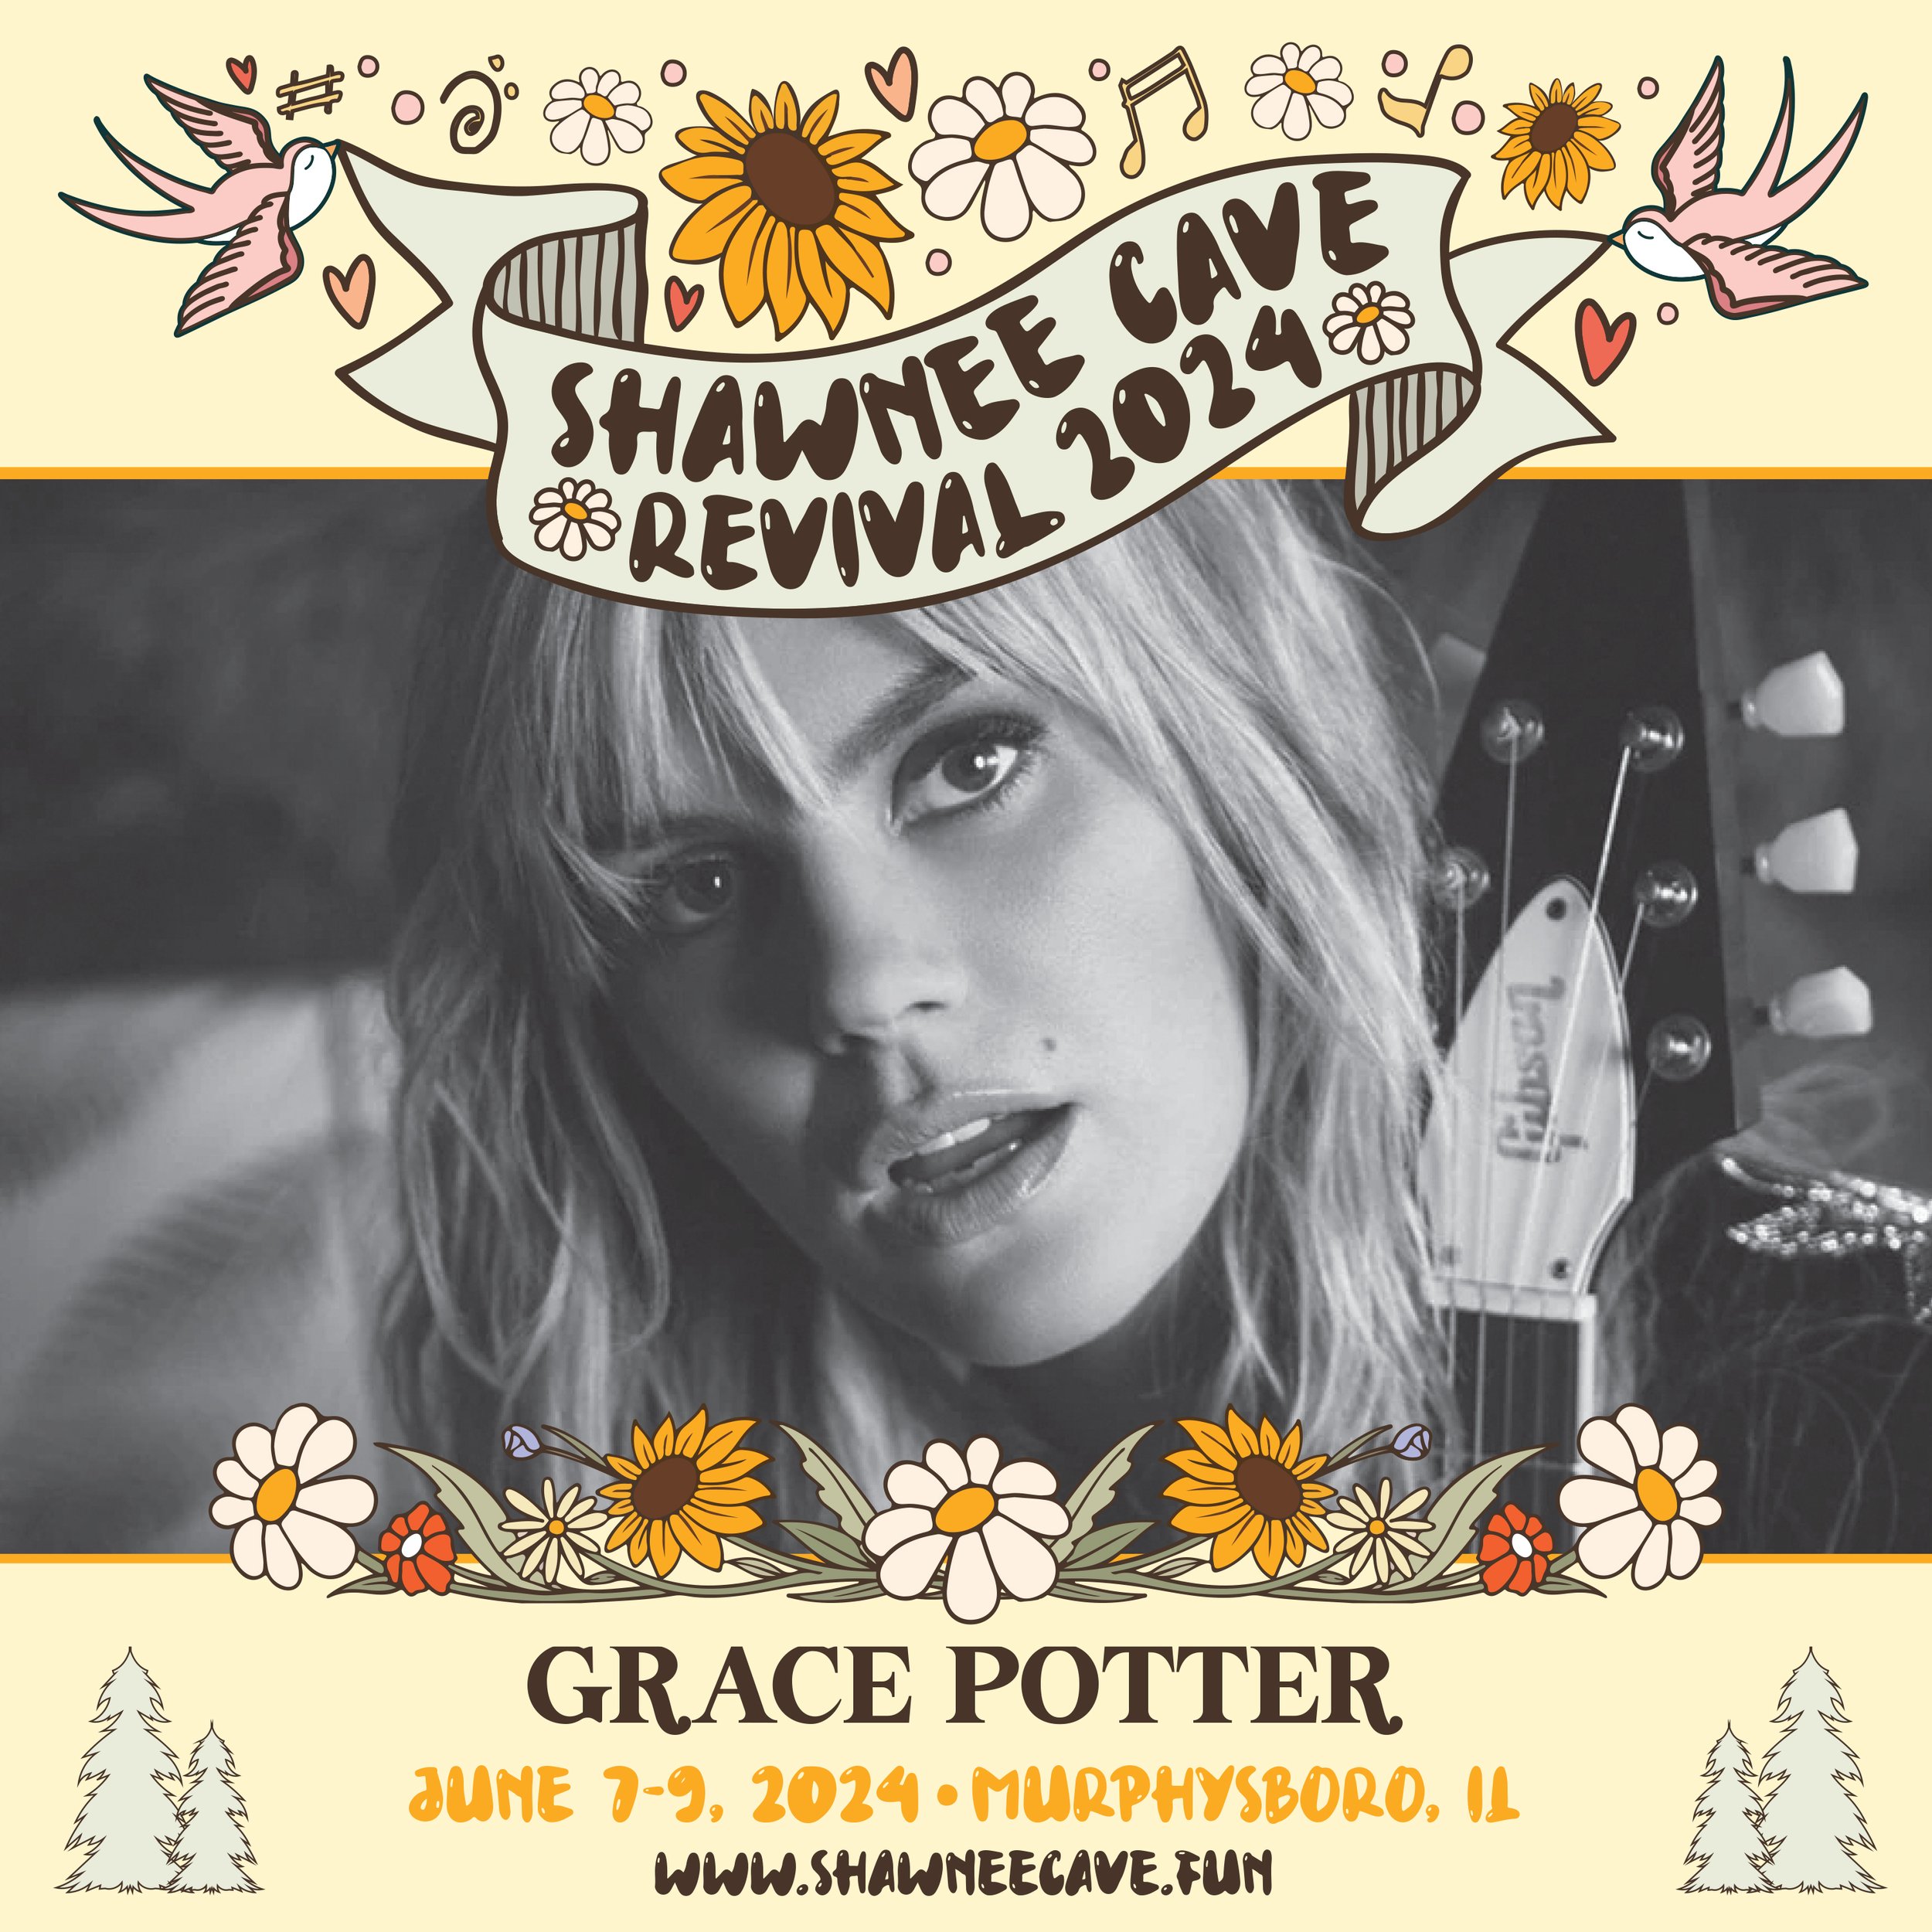 Grace Potter - Shawnee Cave Revival.jpg